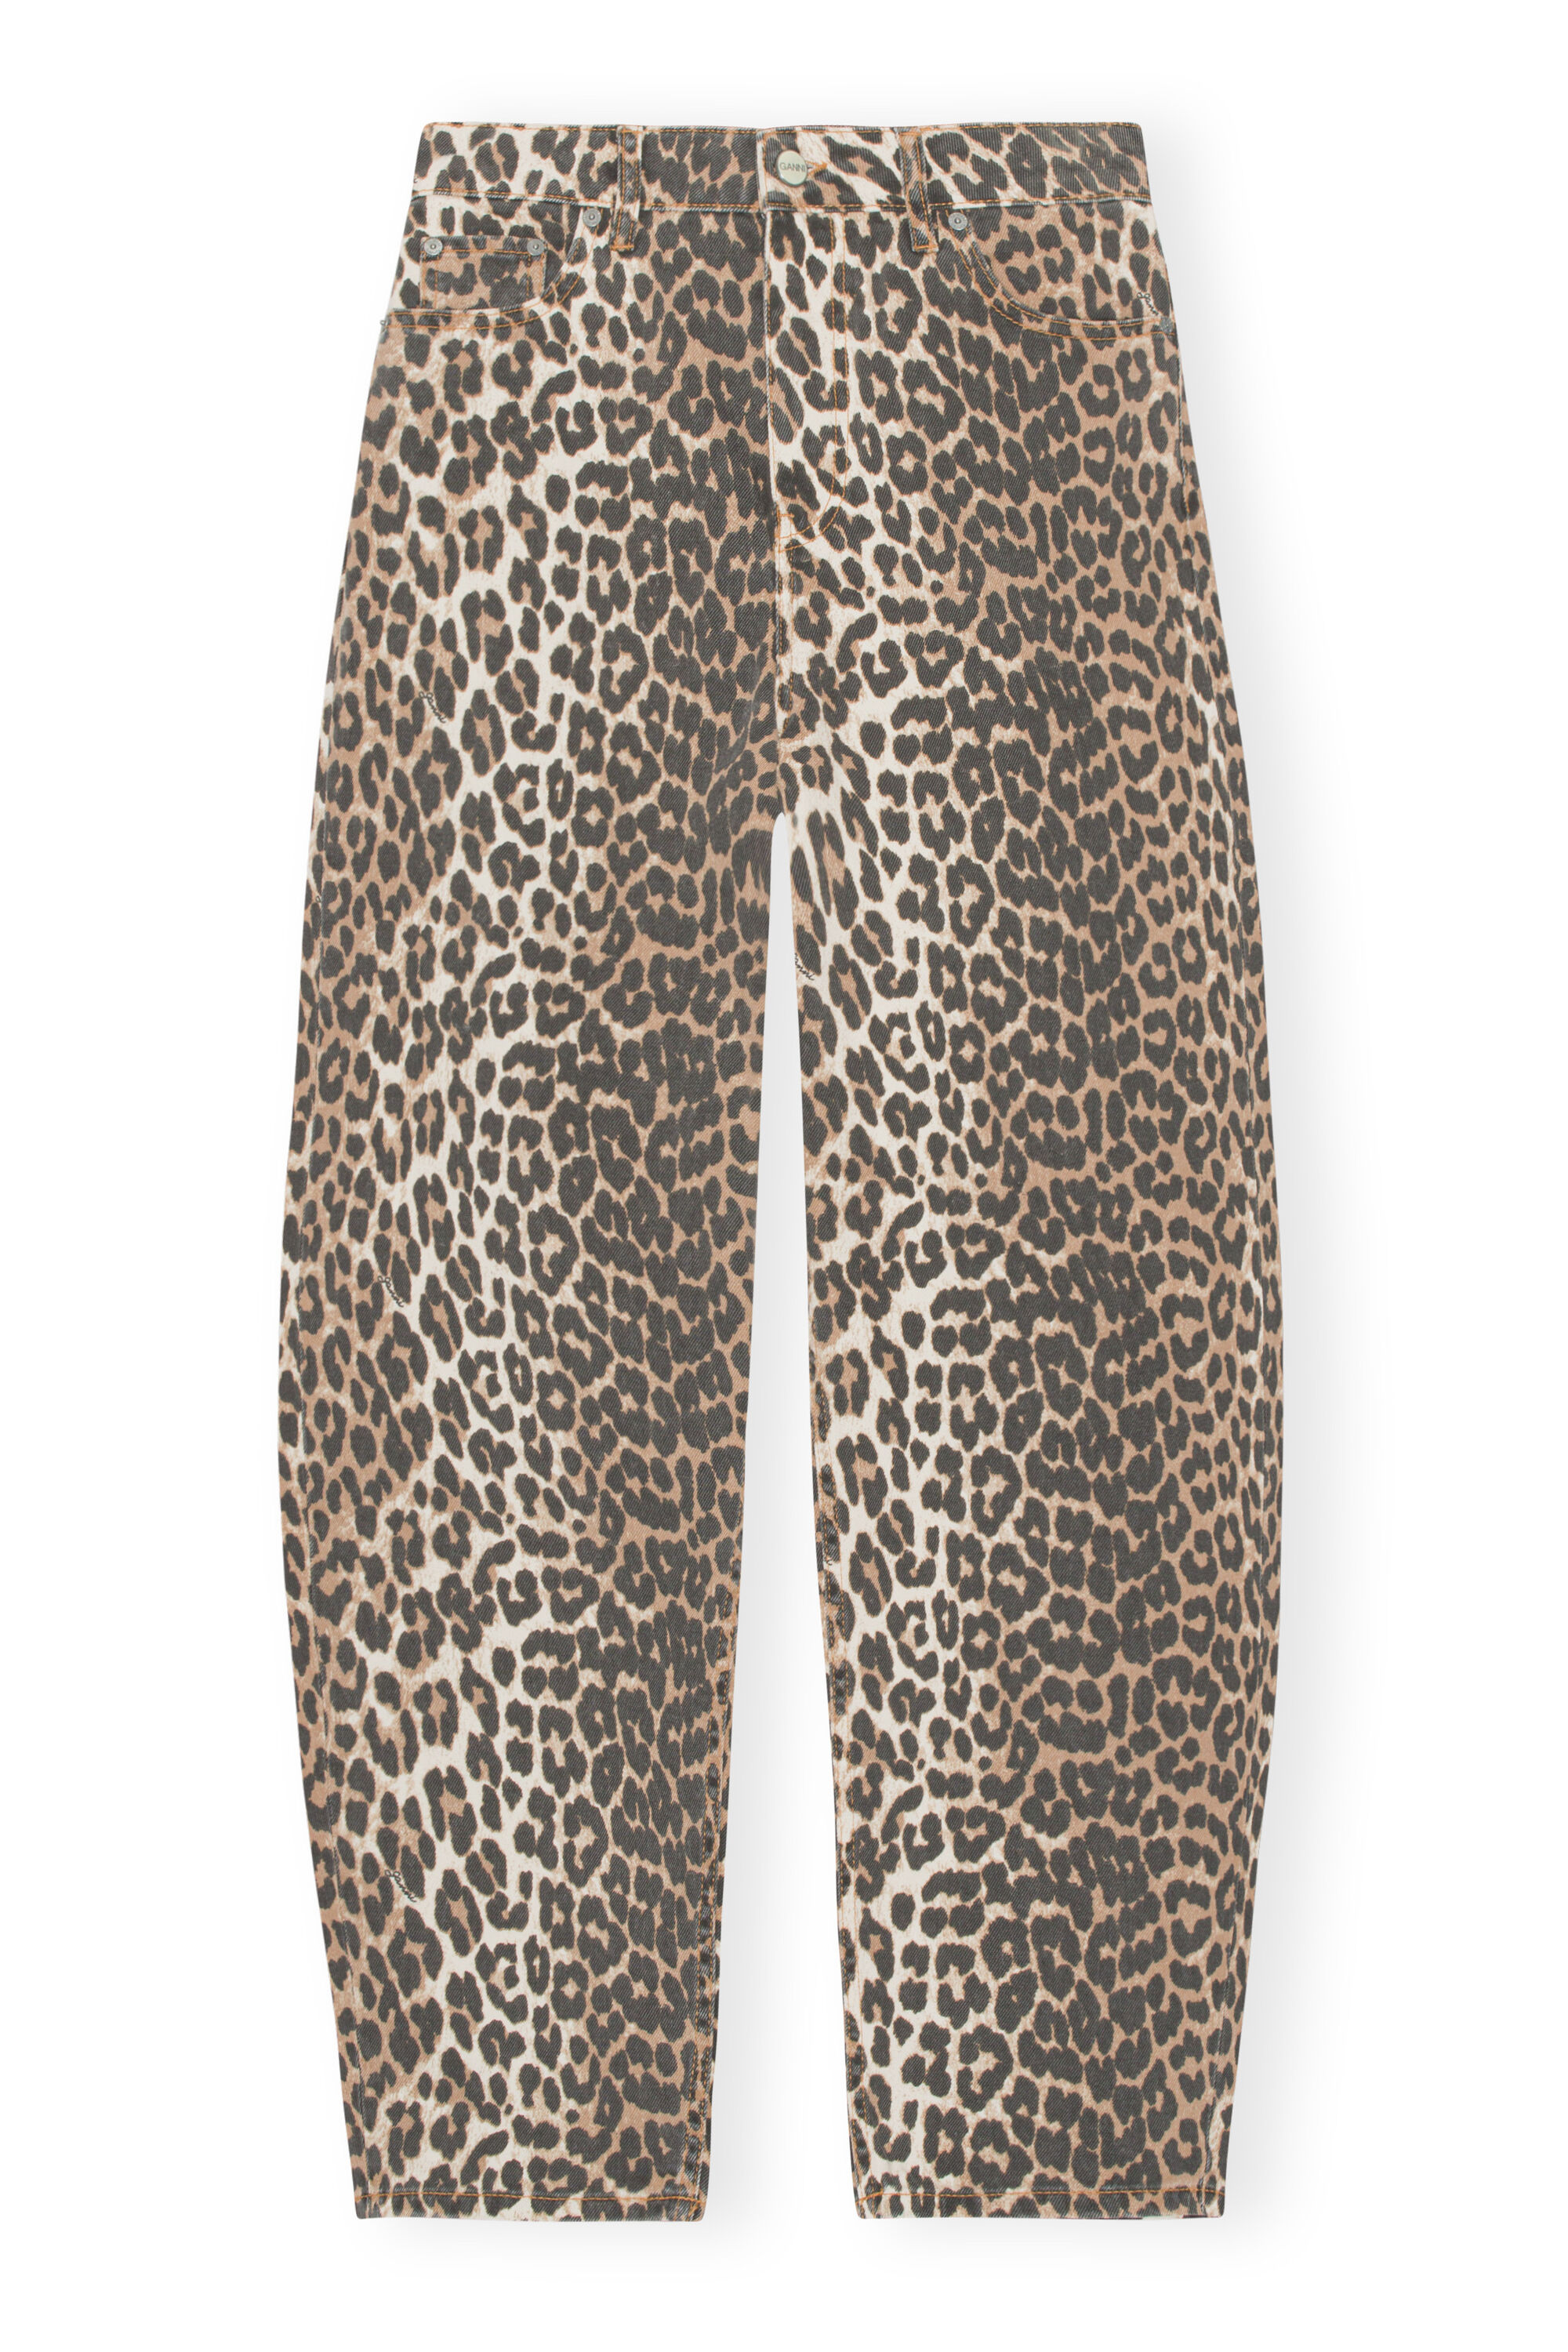 Leopard Leopard Denim Stary Jeans GANNI DK